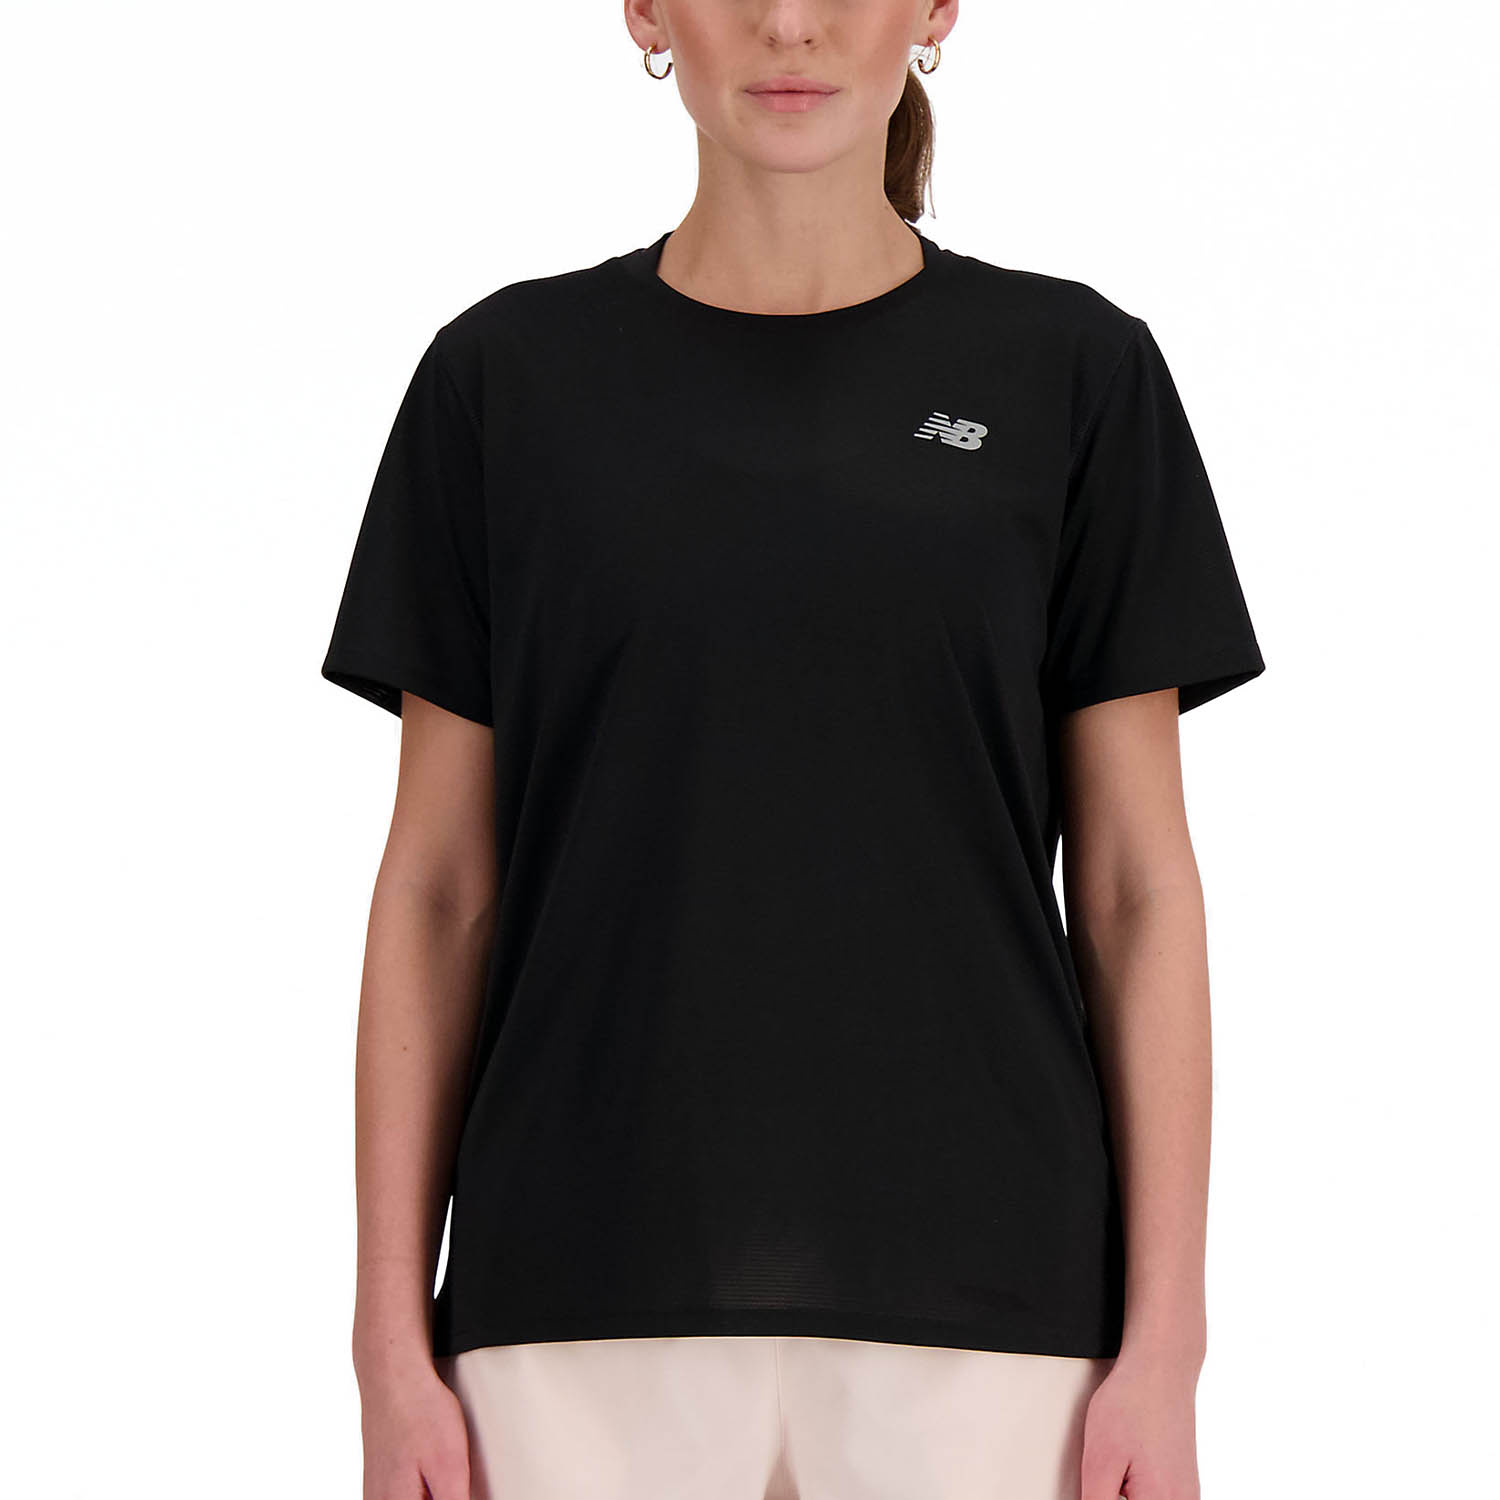 New Balance Performance Camiseta - Black